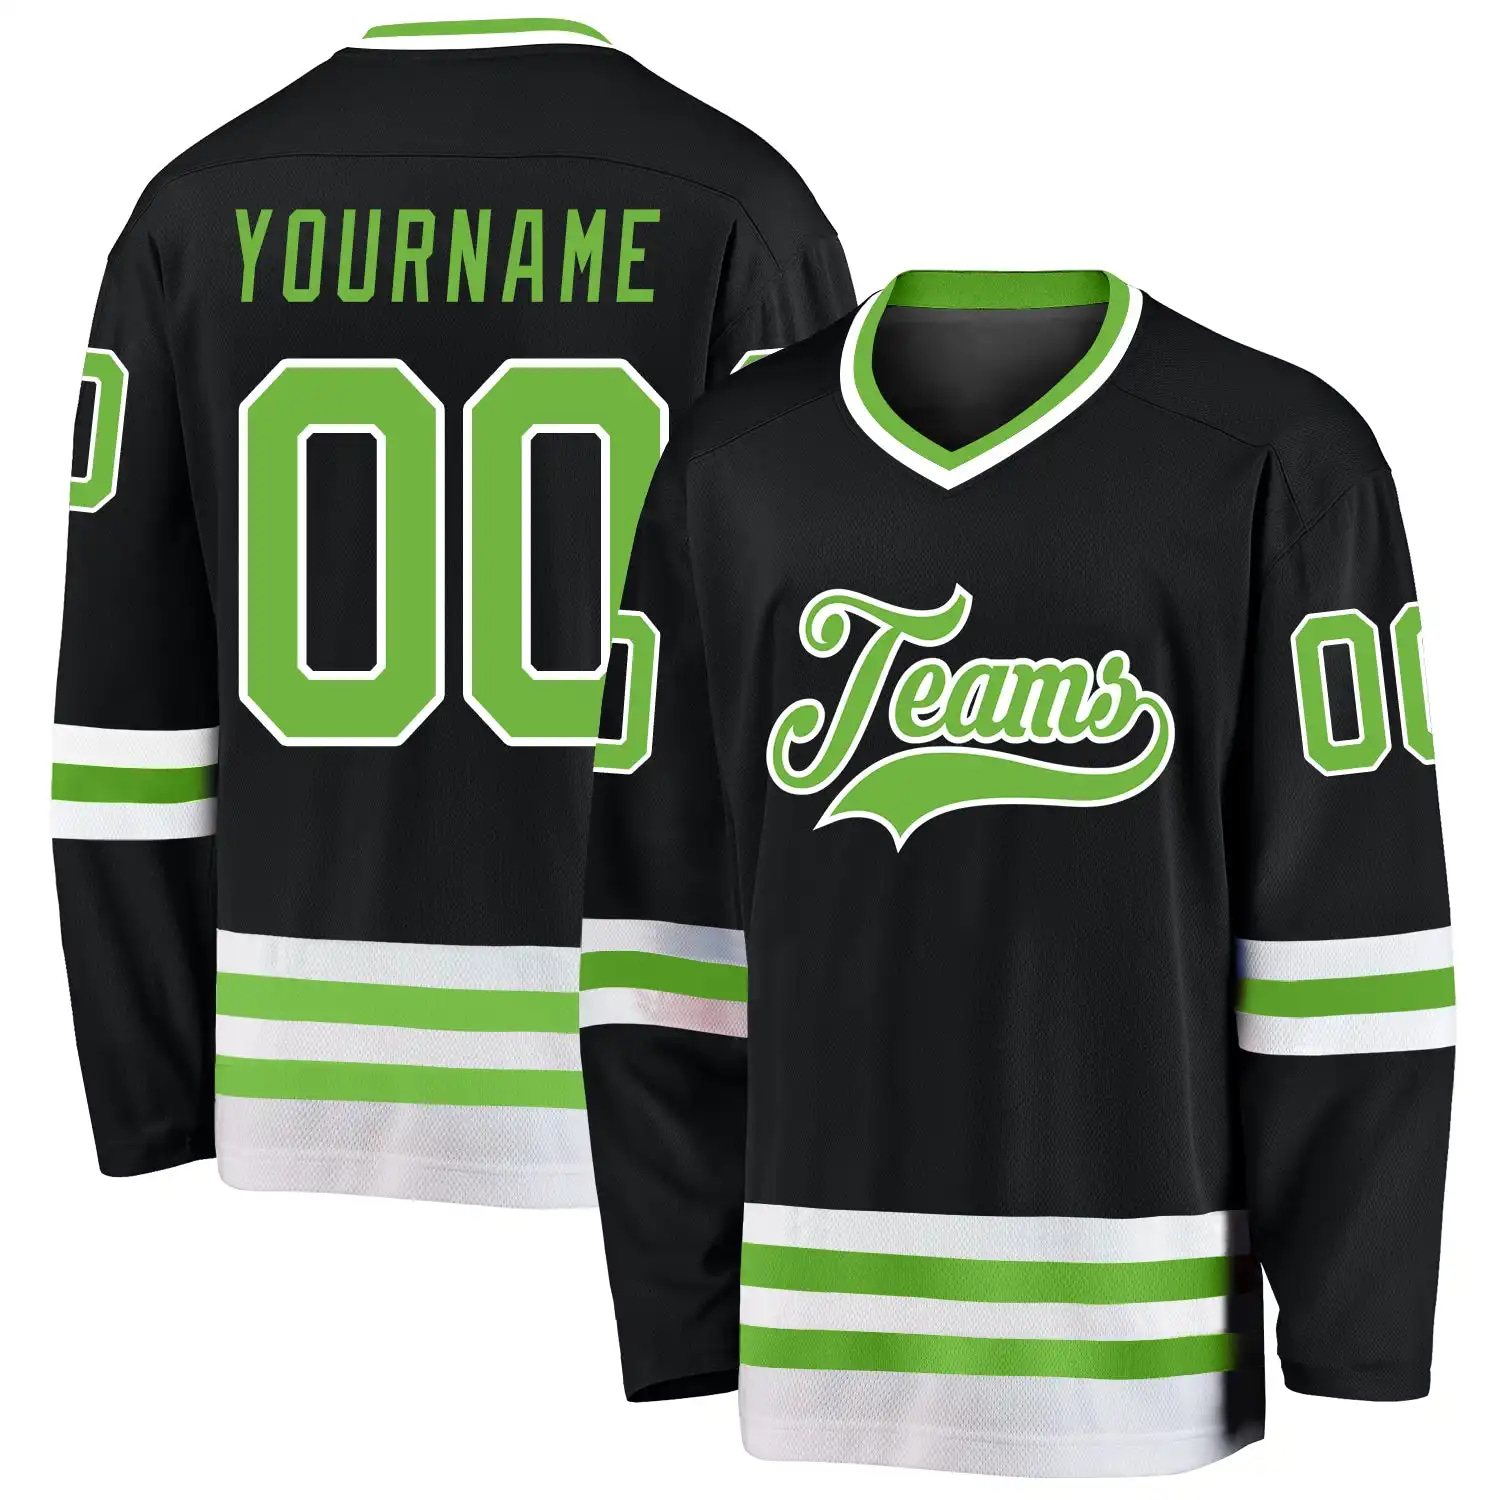 Stitched And Print Black Neon Green-white Hockey Jersey Custom